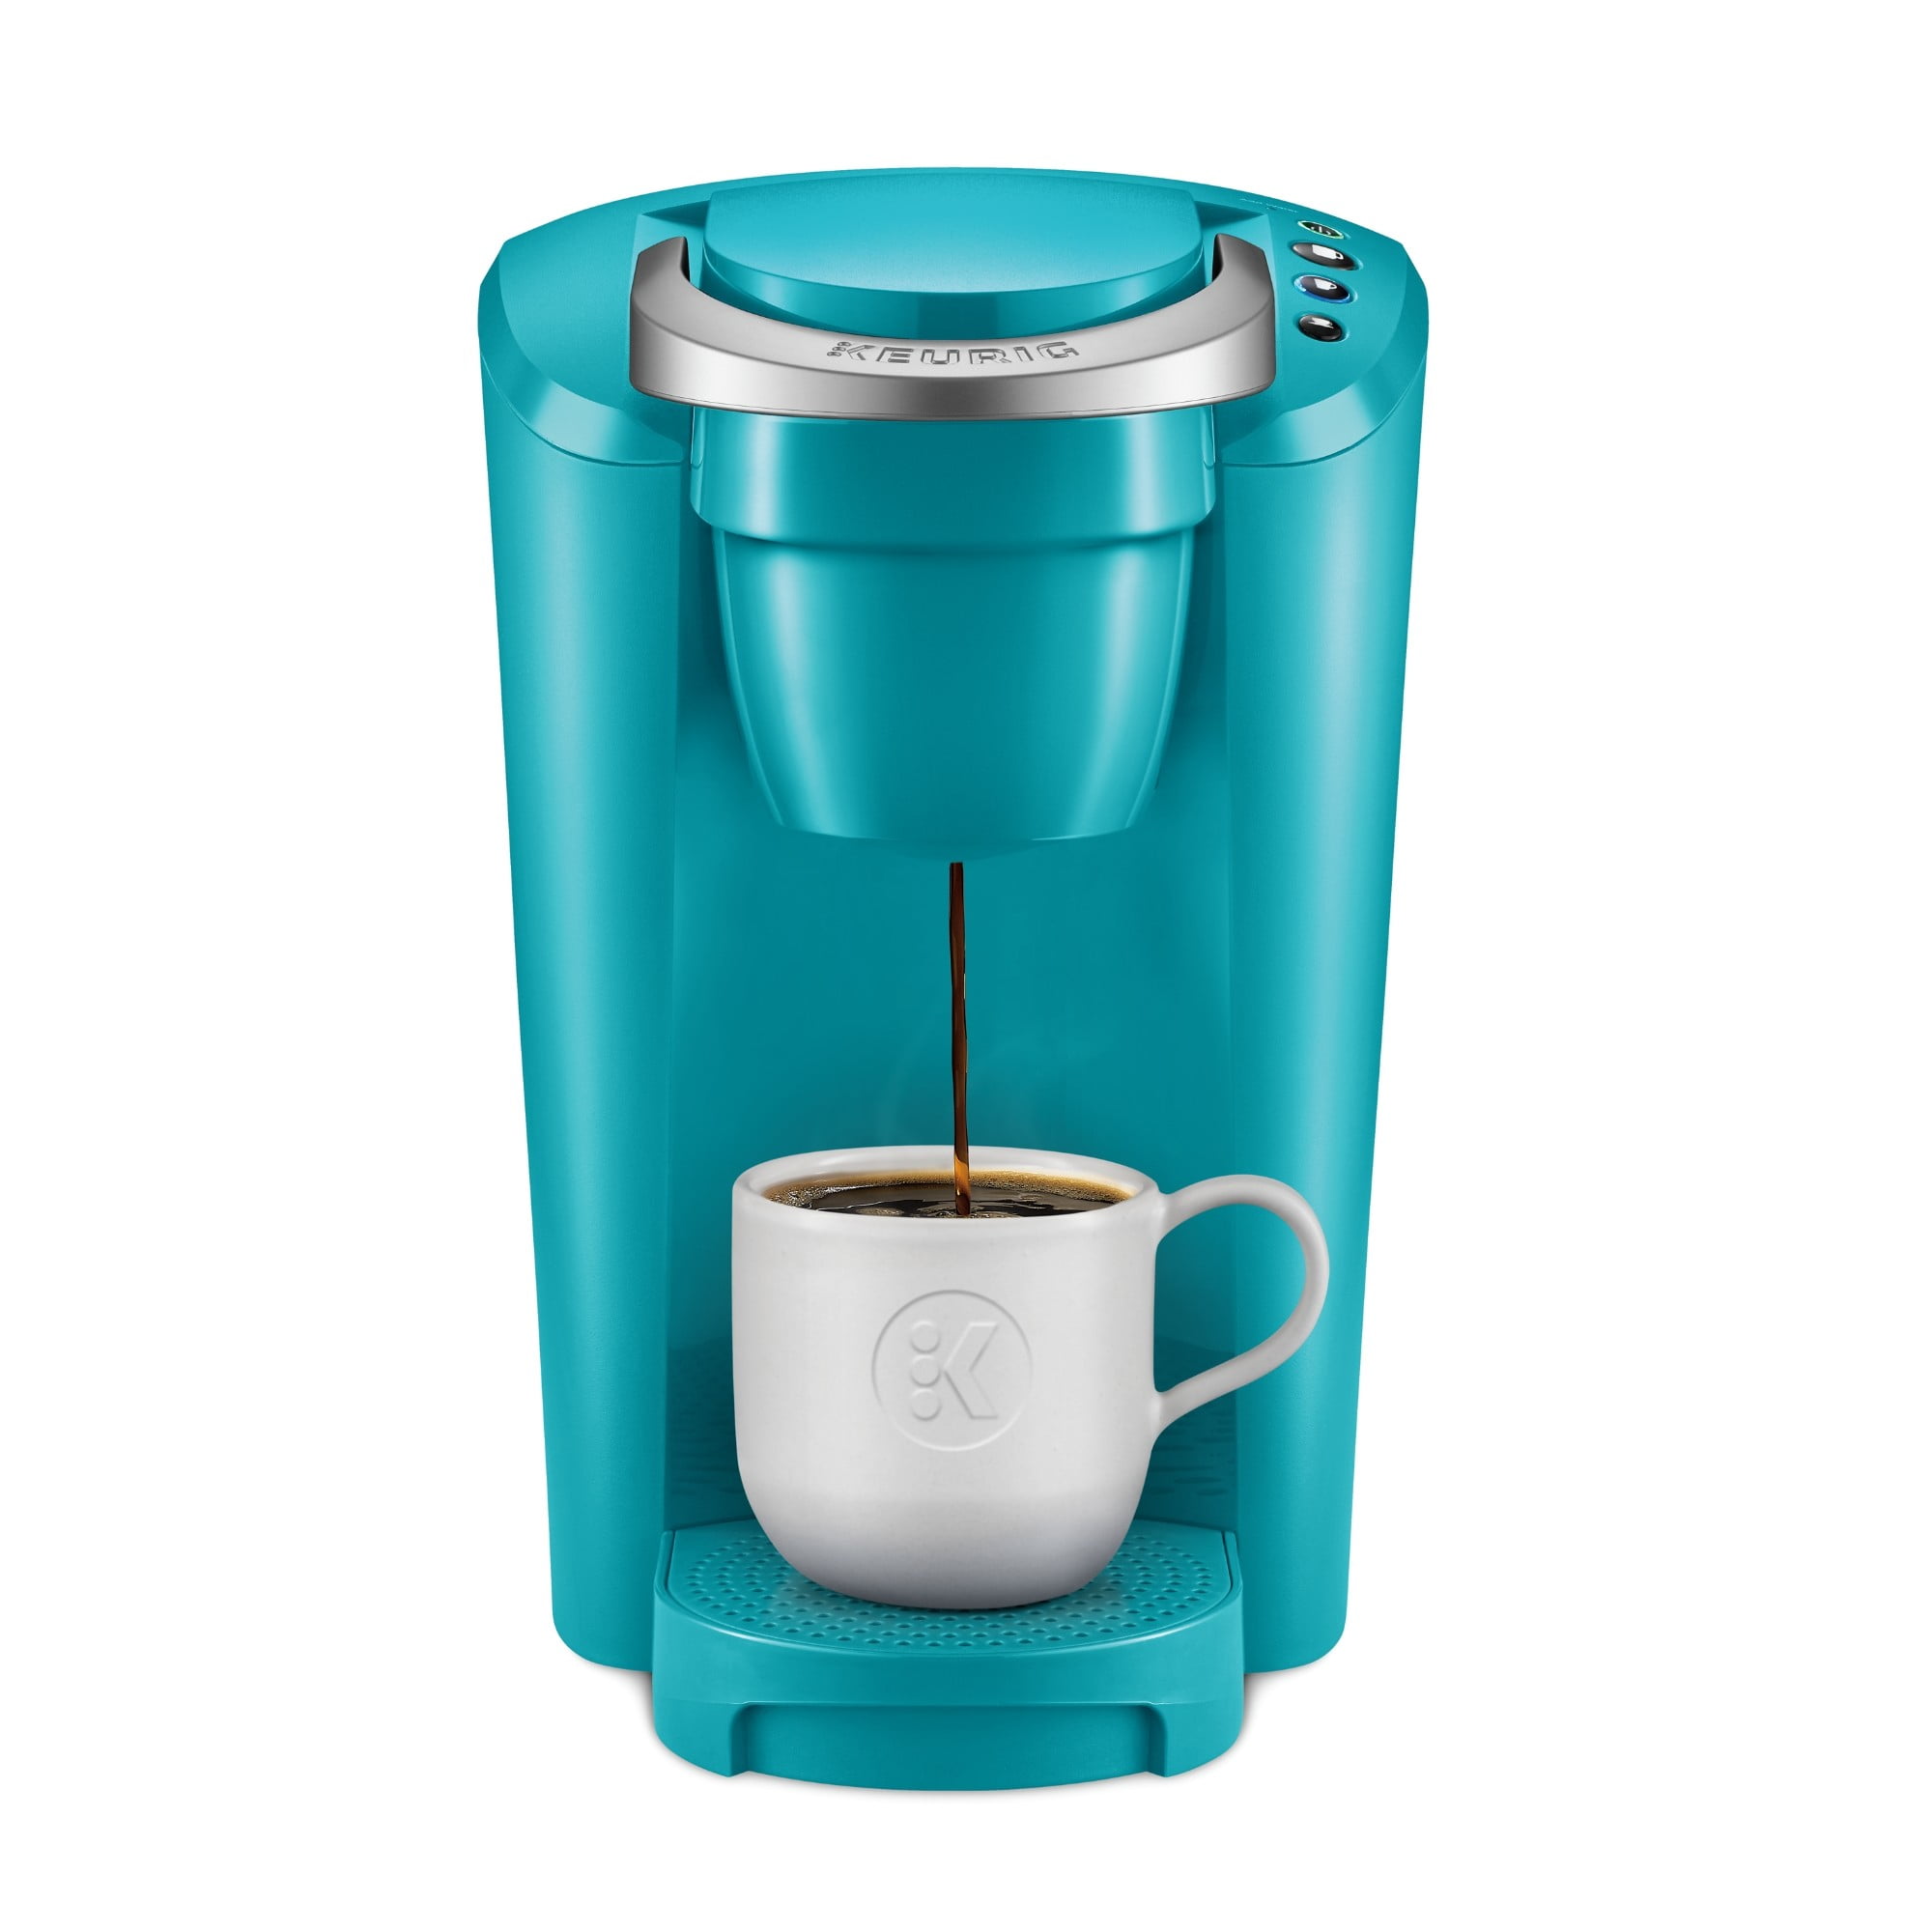 Keurig K-Compact Single Serve Coffee Maker Small Slim Countertop Tea Blue 